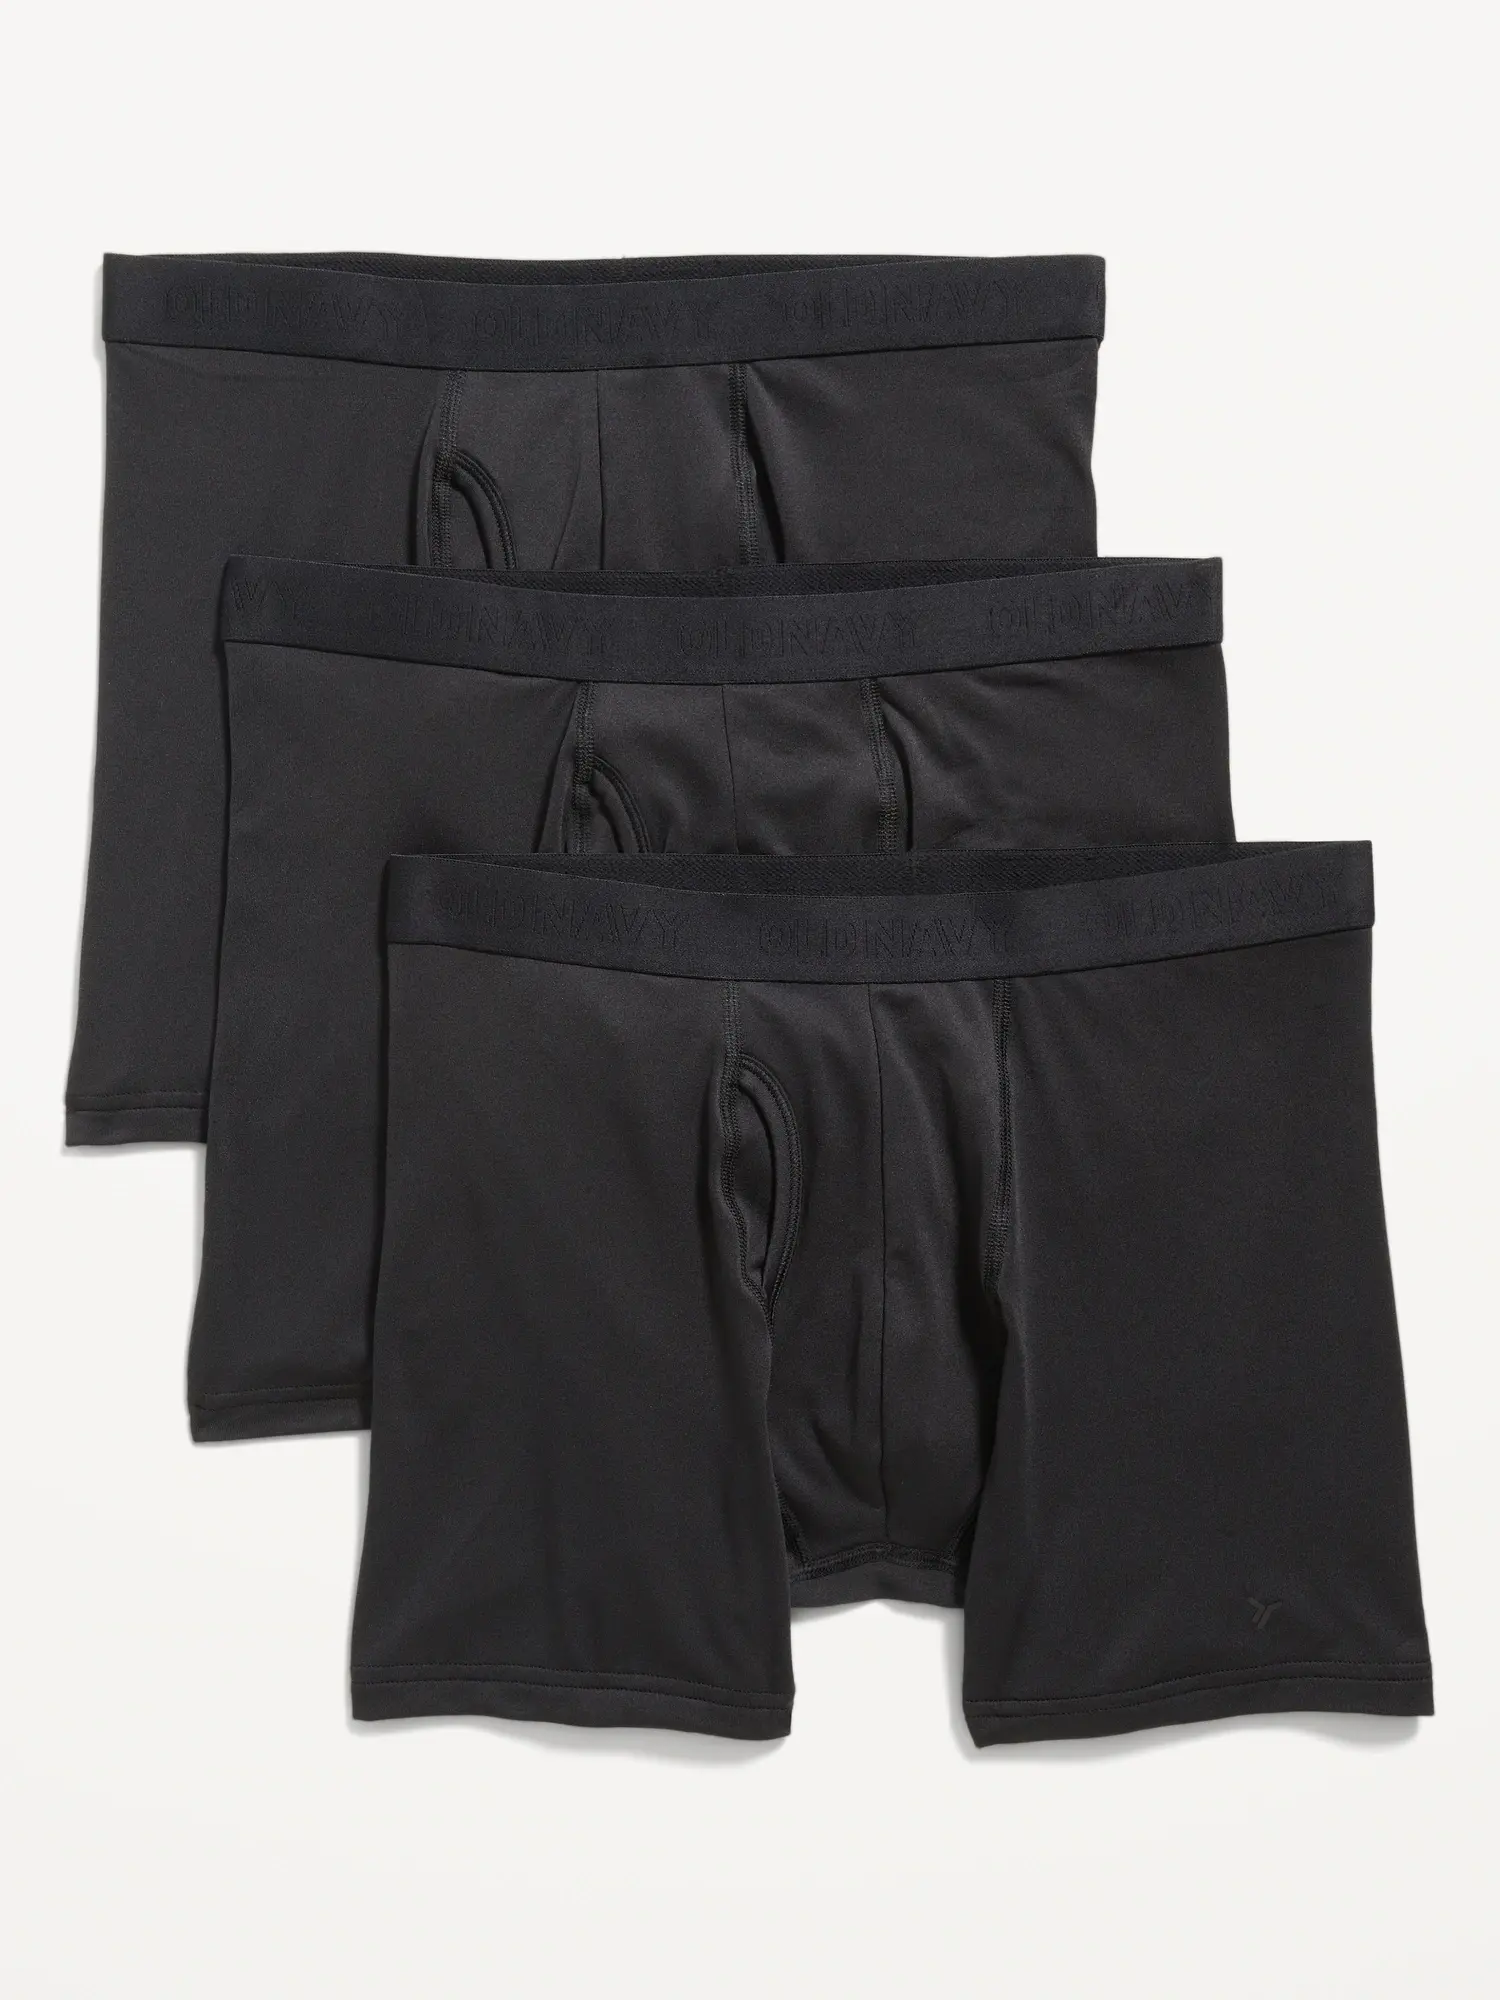 Old Navy Go-Dry Cool Performance Boxer-Brief Underwear 3-Pack -- 5-inch inseam black. 1